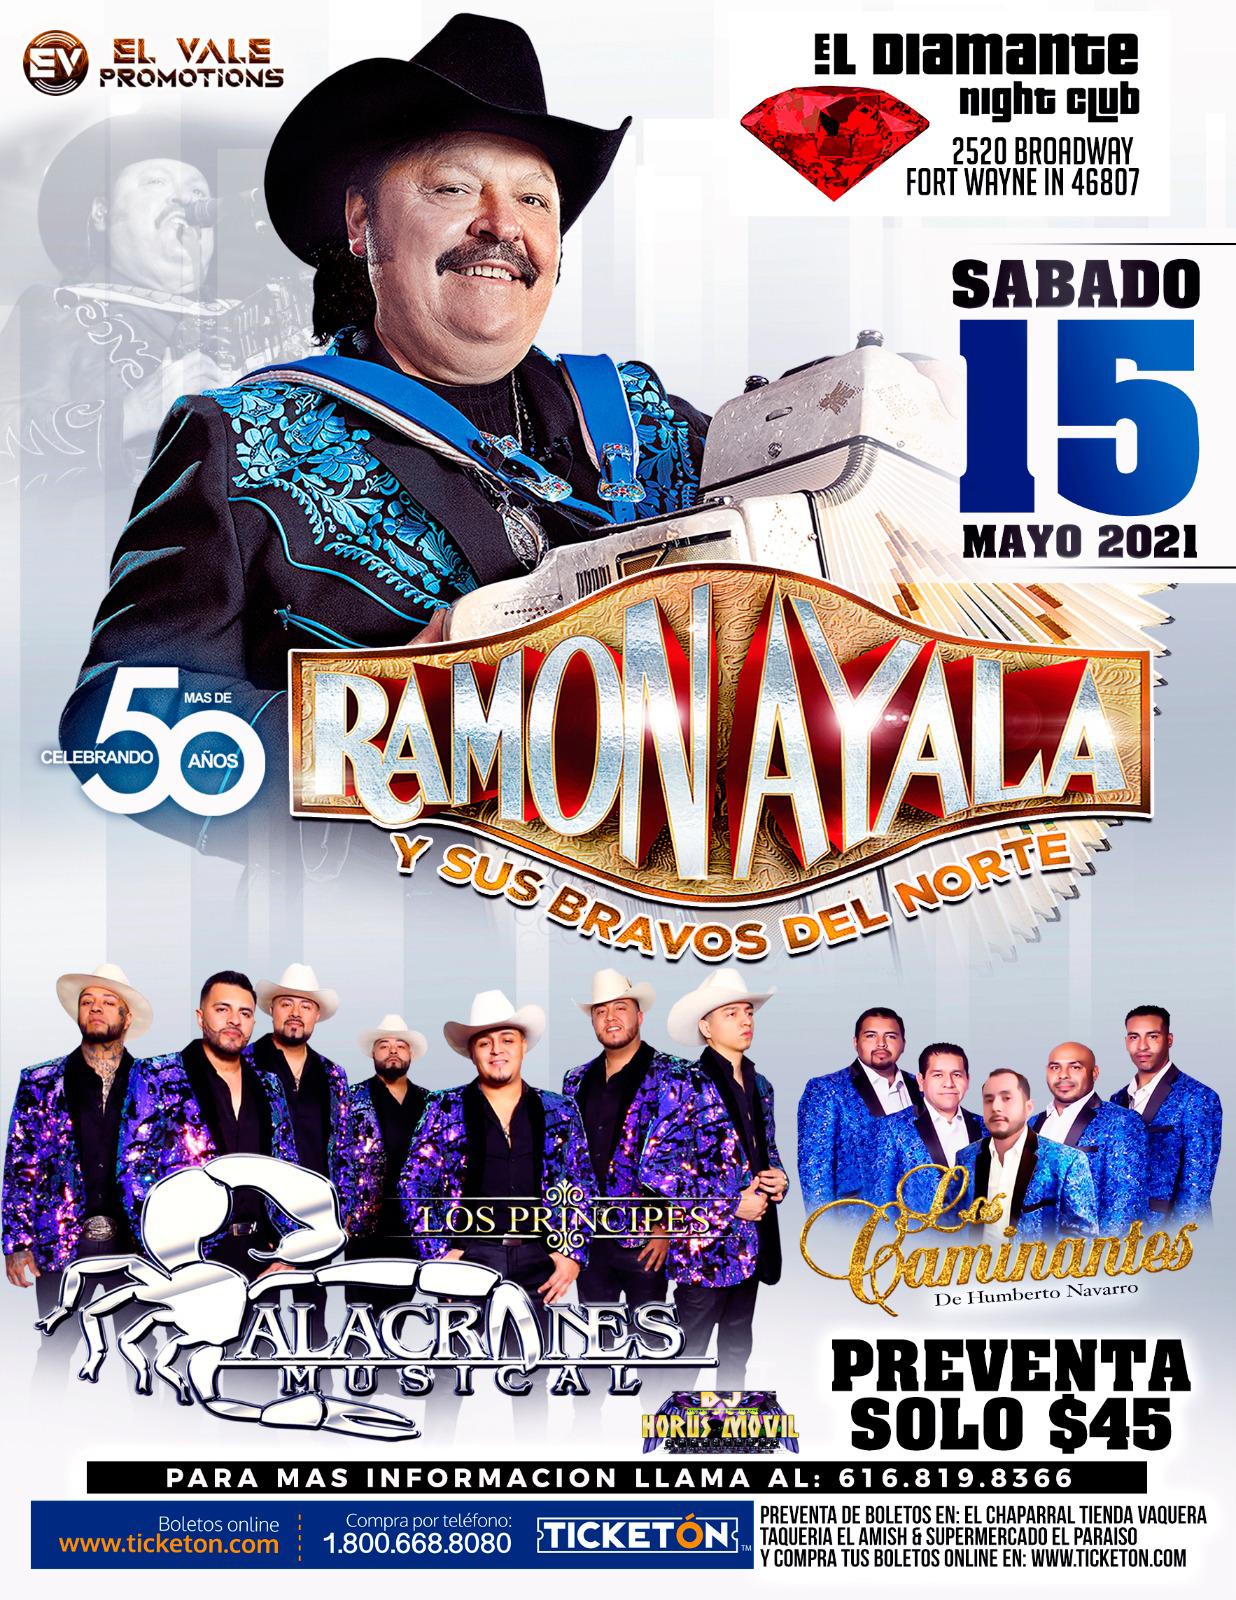 Ramon Ayala El Diamante Night Club Tickets Boletos Fort Wayne IN